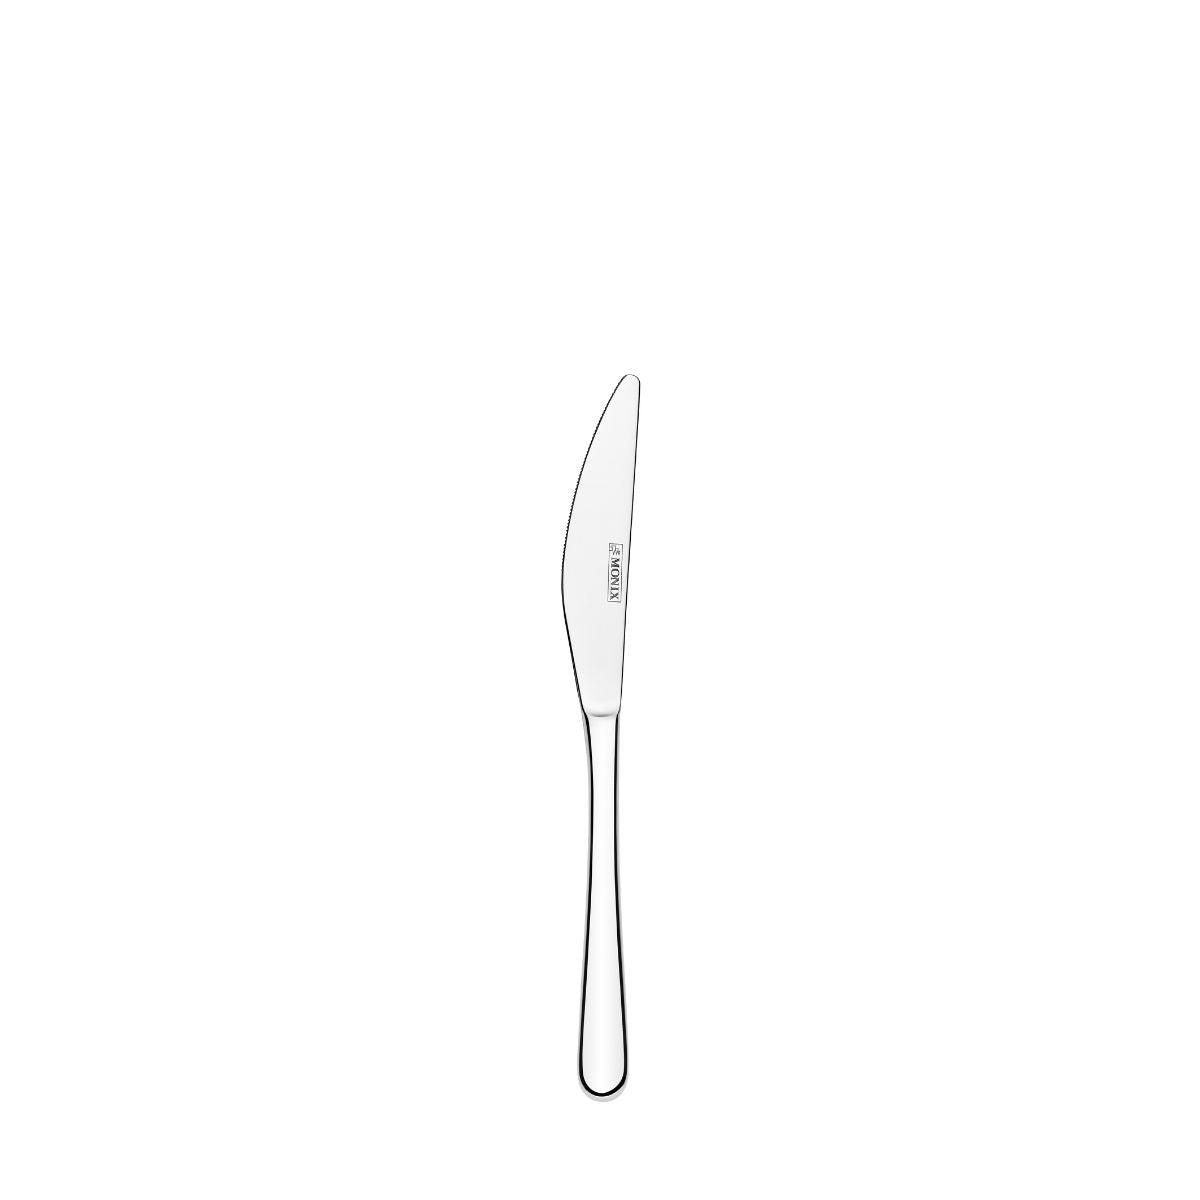 Pisa Cutlery